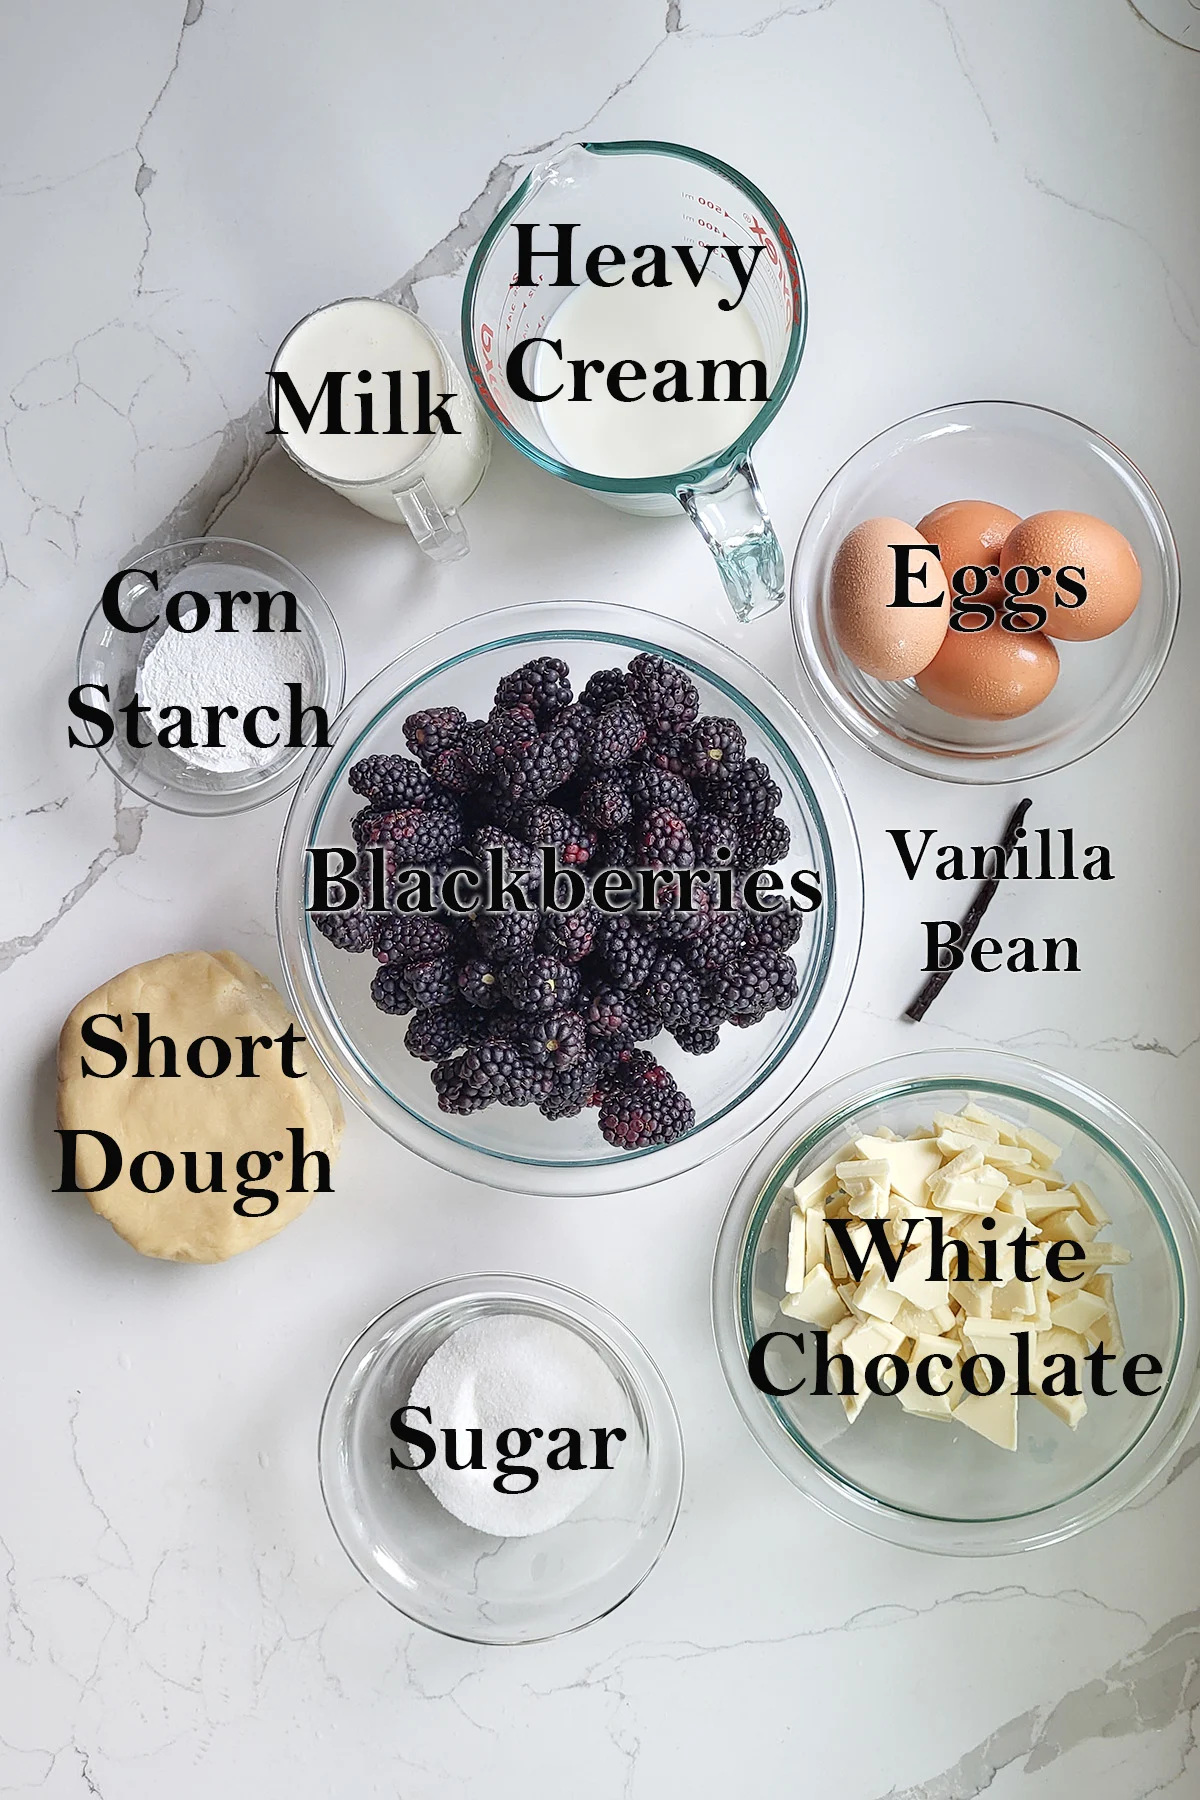 Ingredients for blackberry tart in bowls.